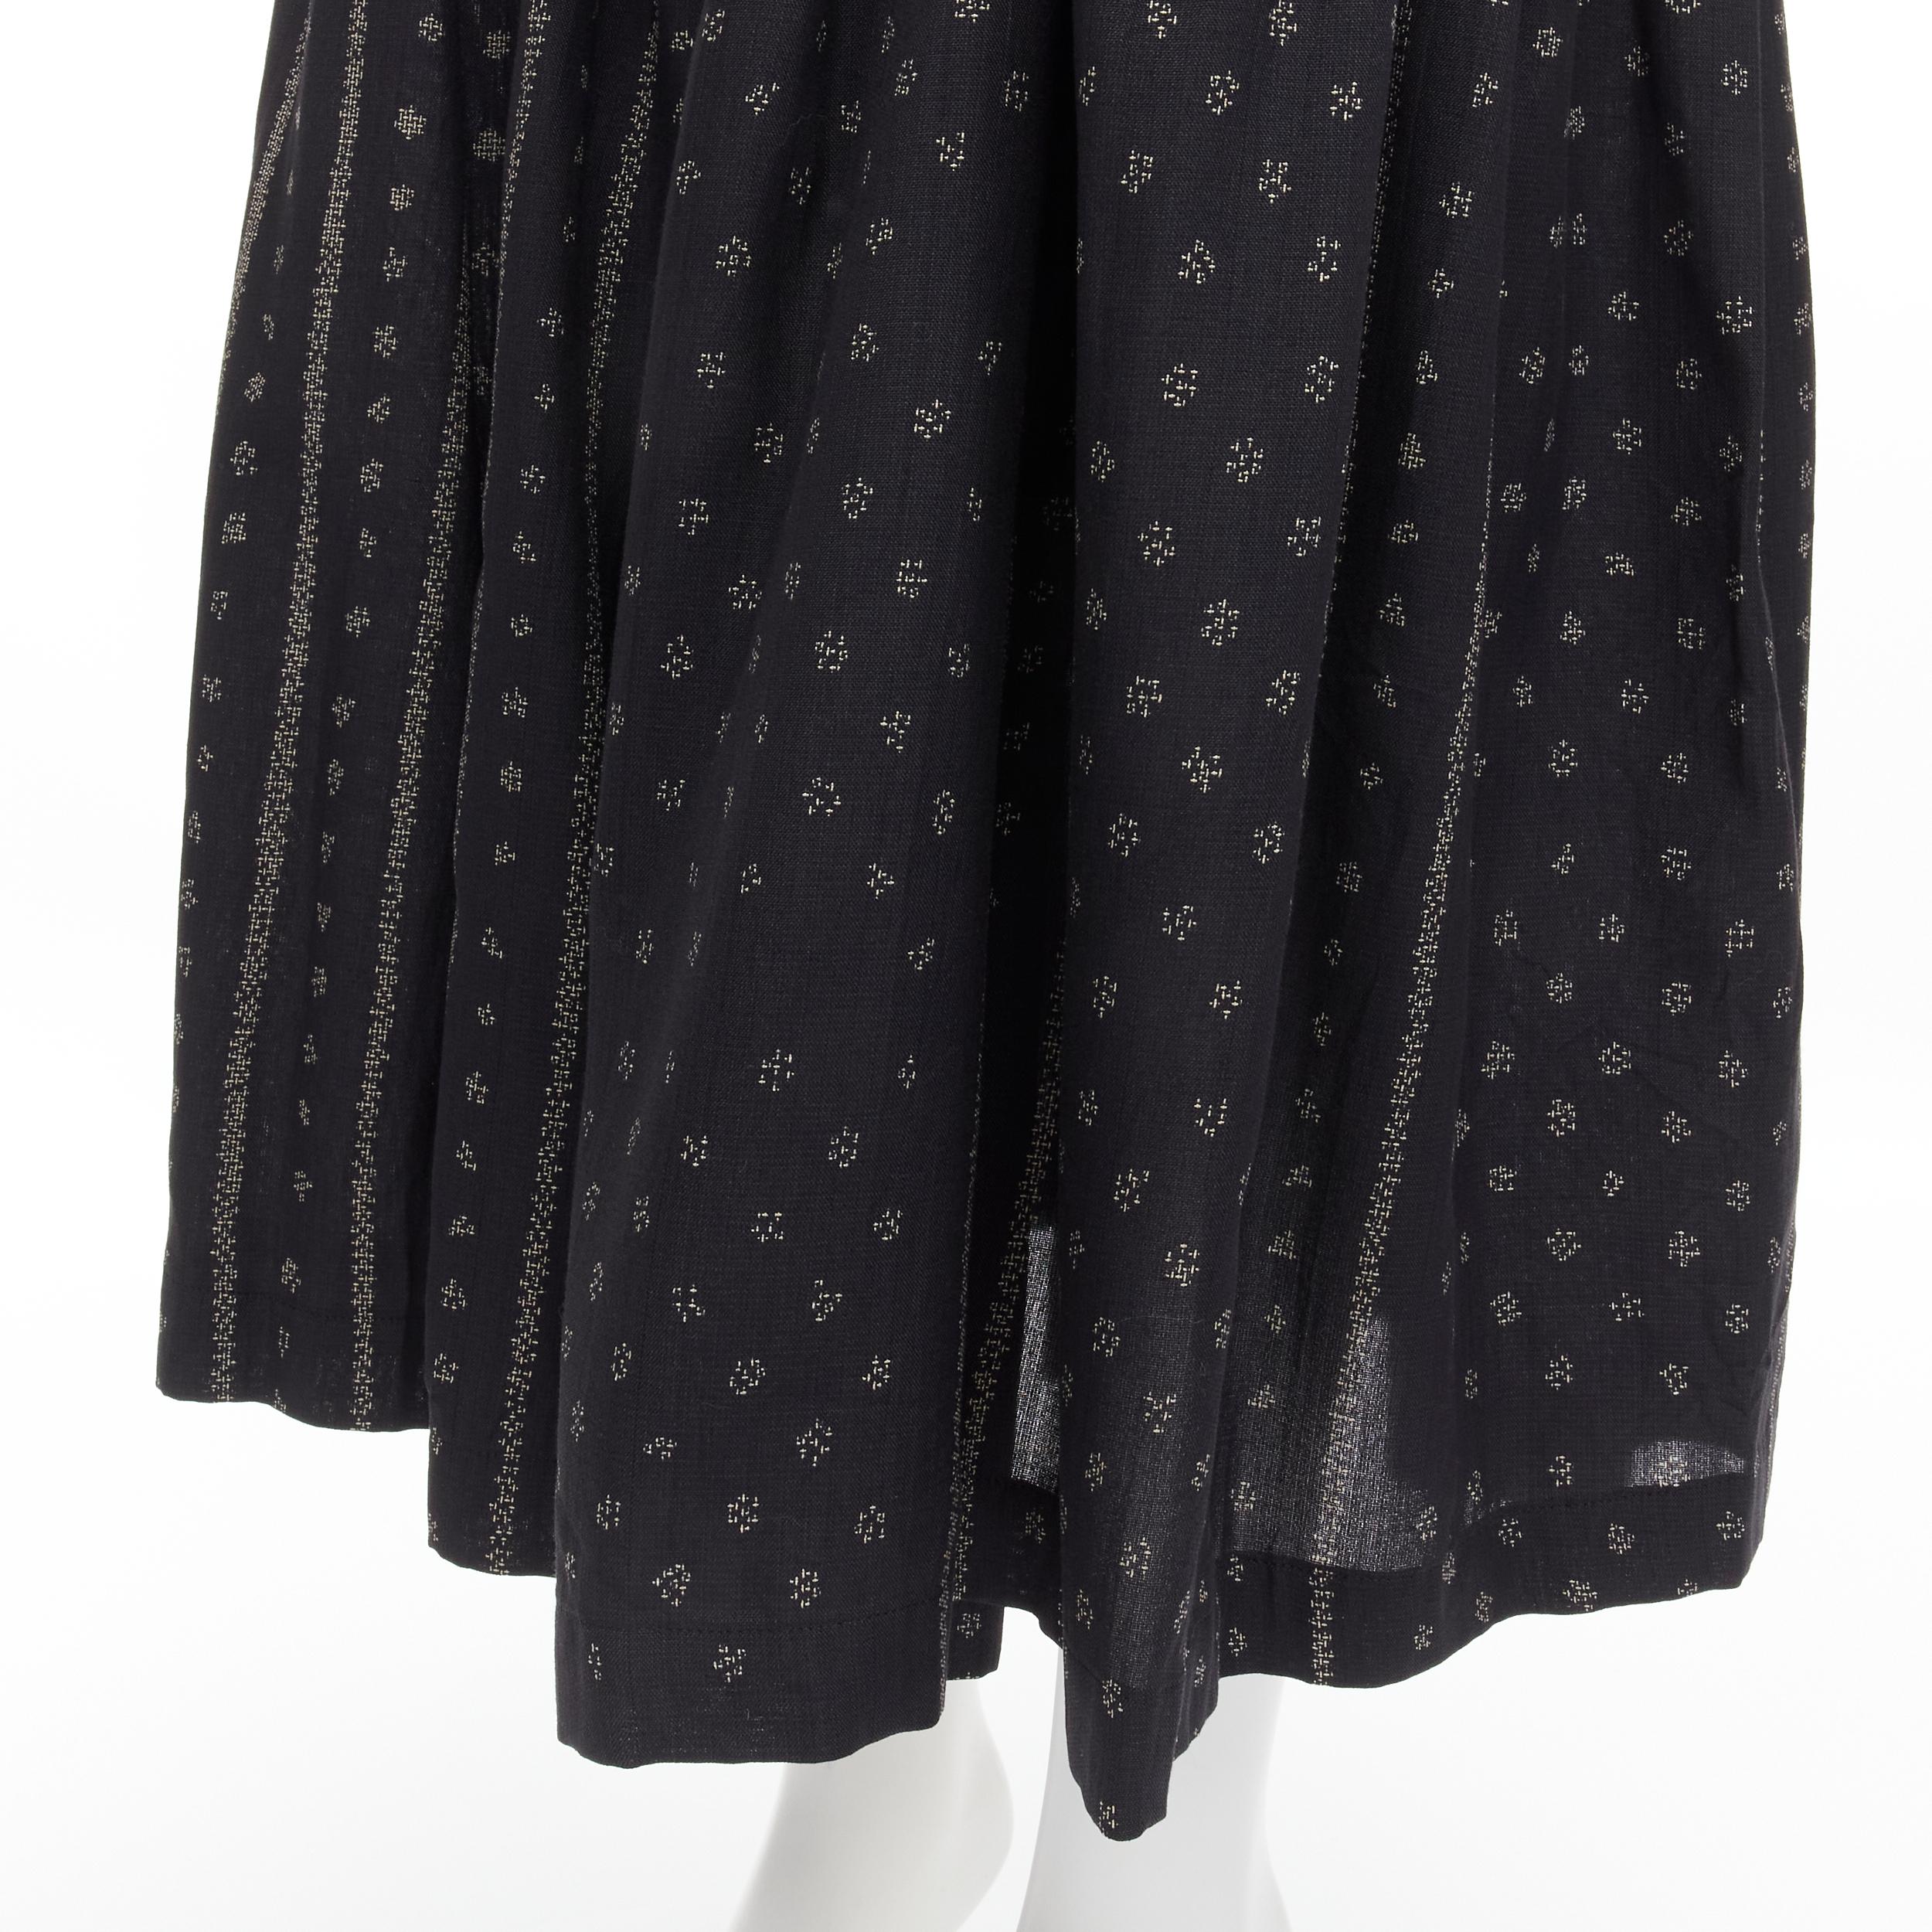 TRICOT COMME DES GARCONS black Ethnic Bohemian floral jacquard flared skirt S For Sale 3